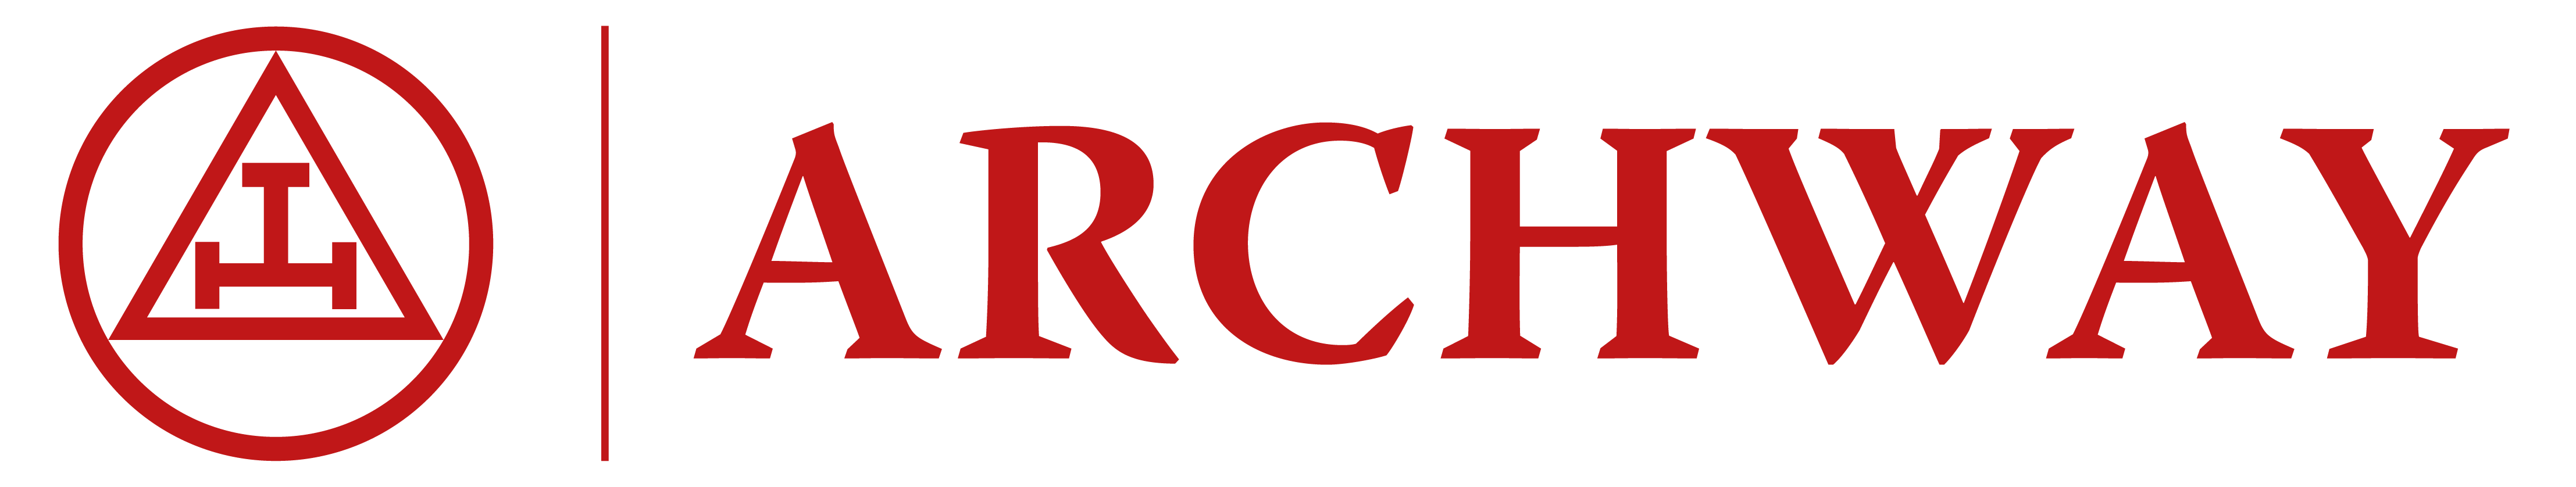 Archway red logo